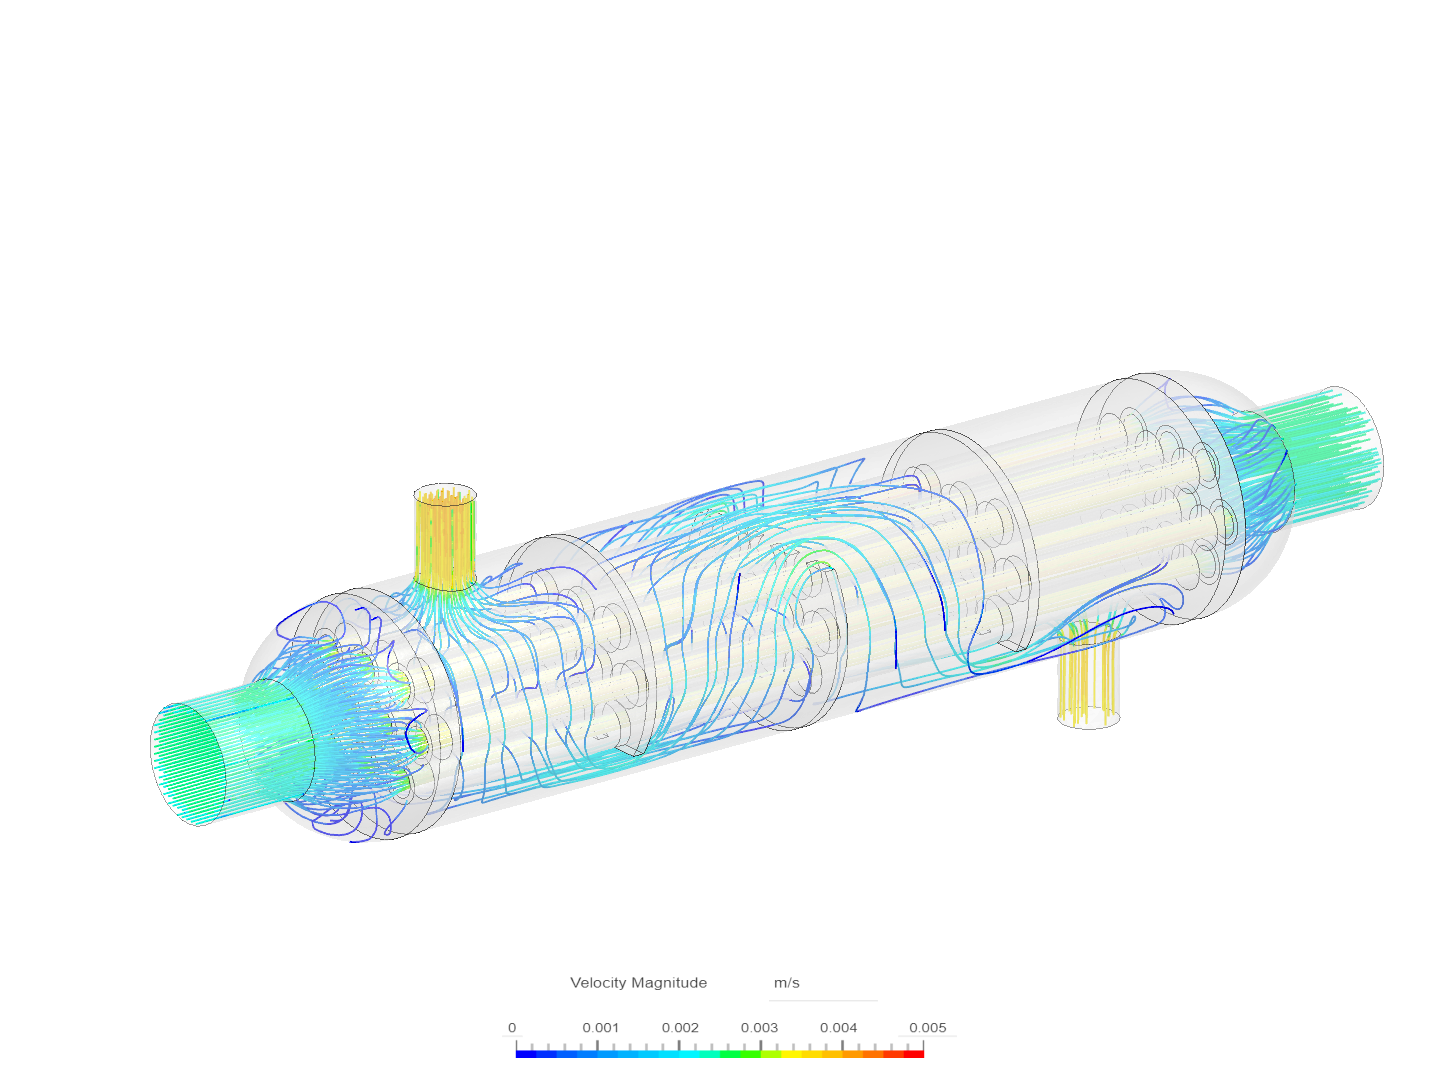 shell and tube heat exvhanger image